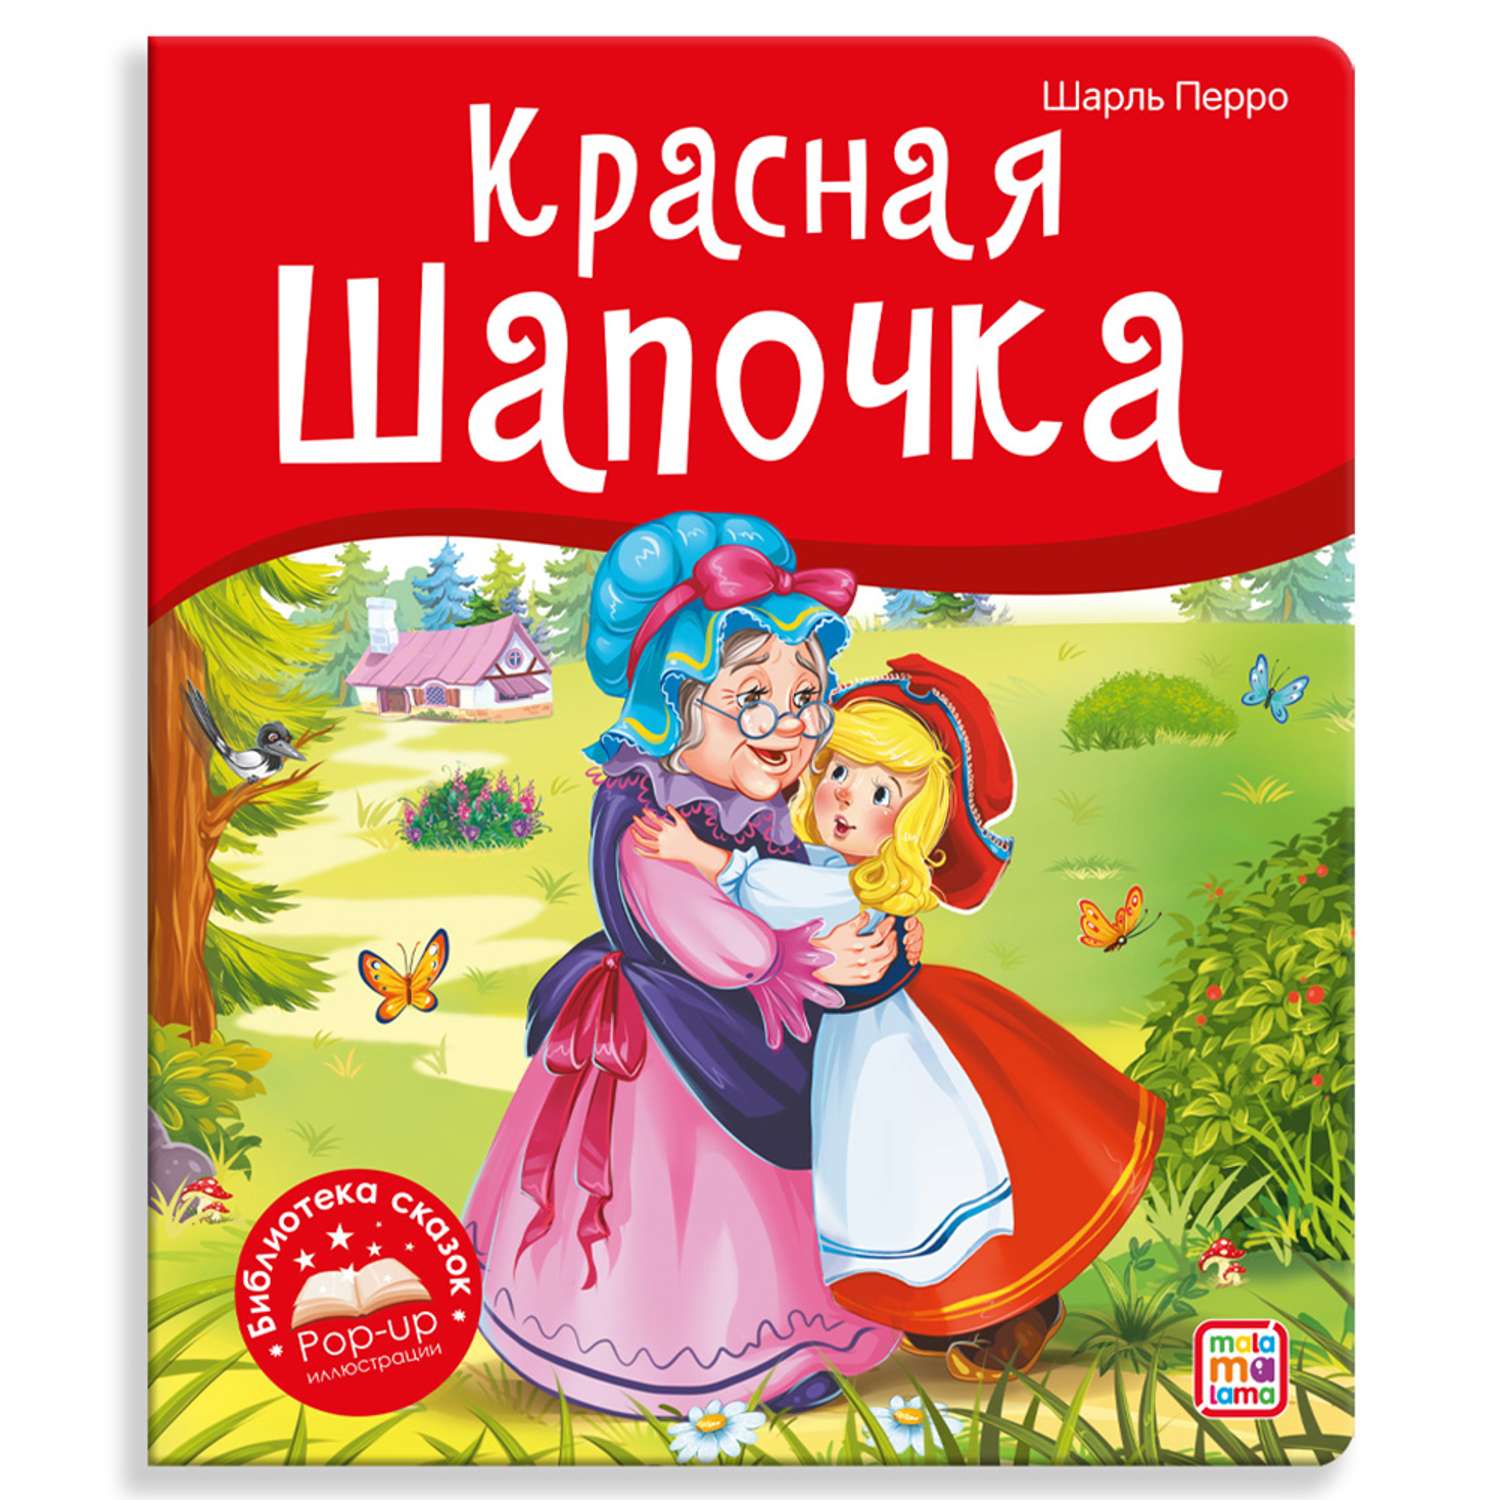 Книга Malamalama с объемными картинками Библиотека сказок Красная Шапочка - фото 1